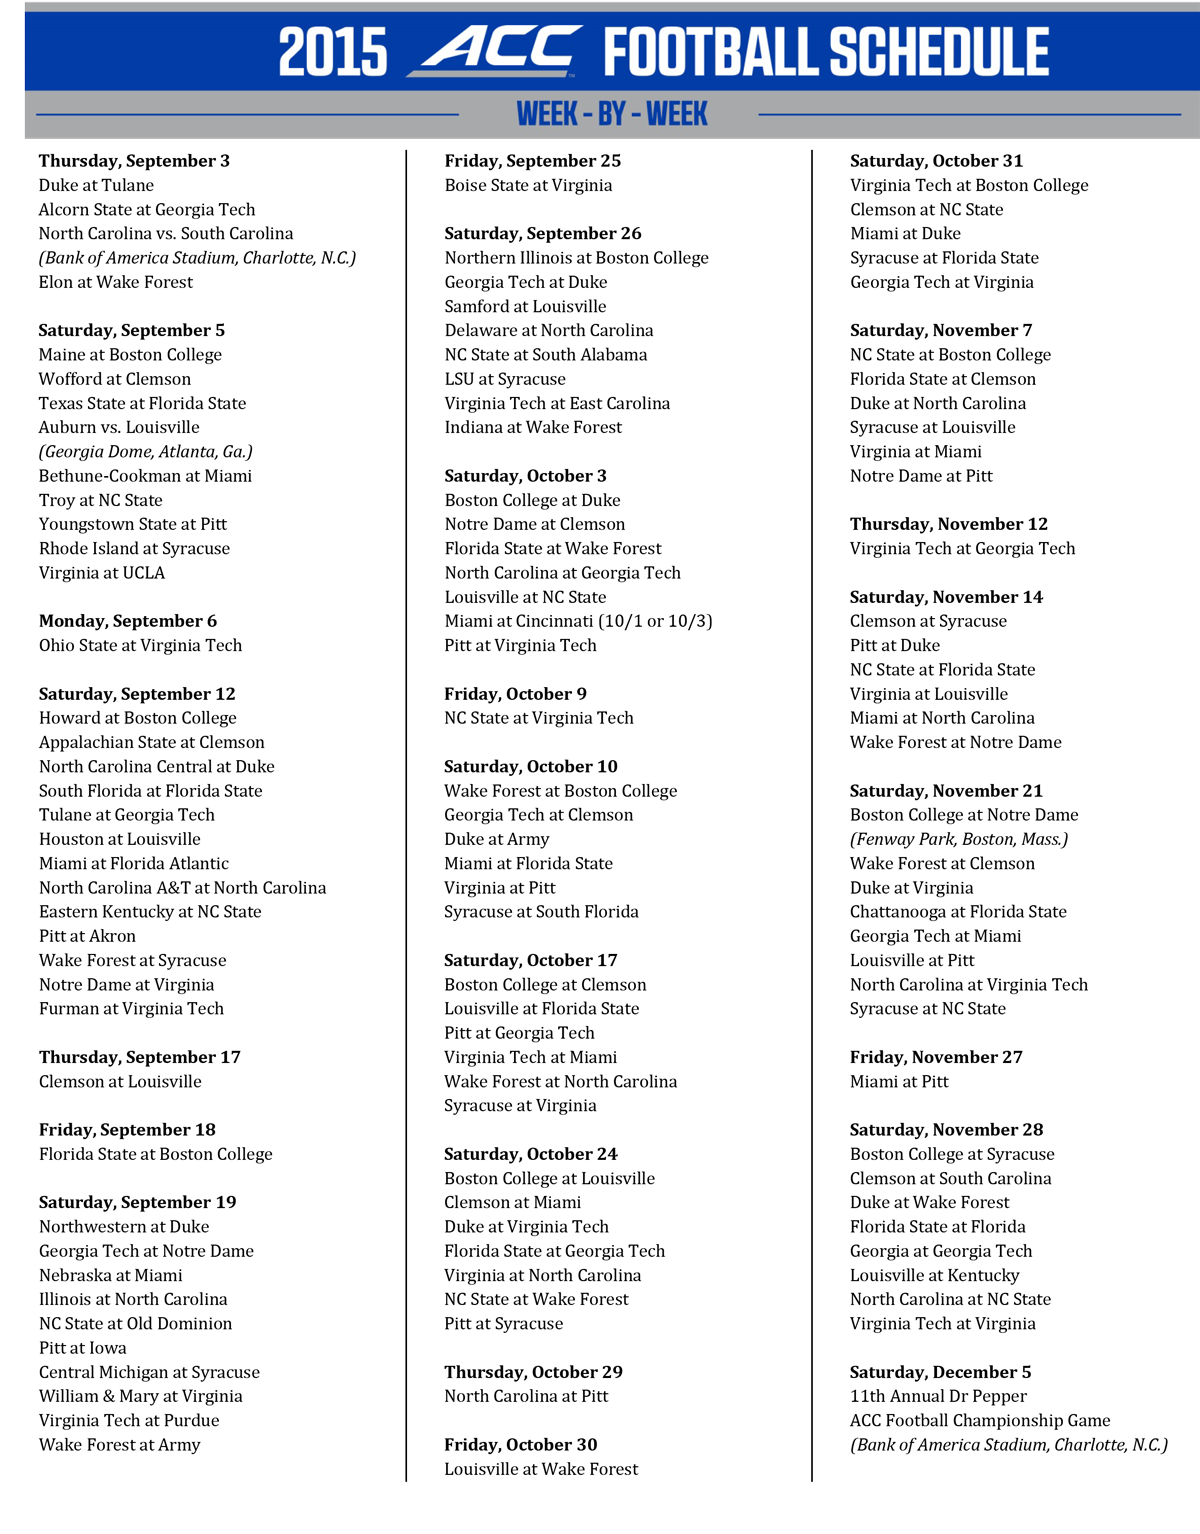 2015 ACC football schedule grid released in full   SBNationcom